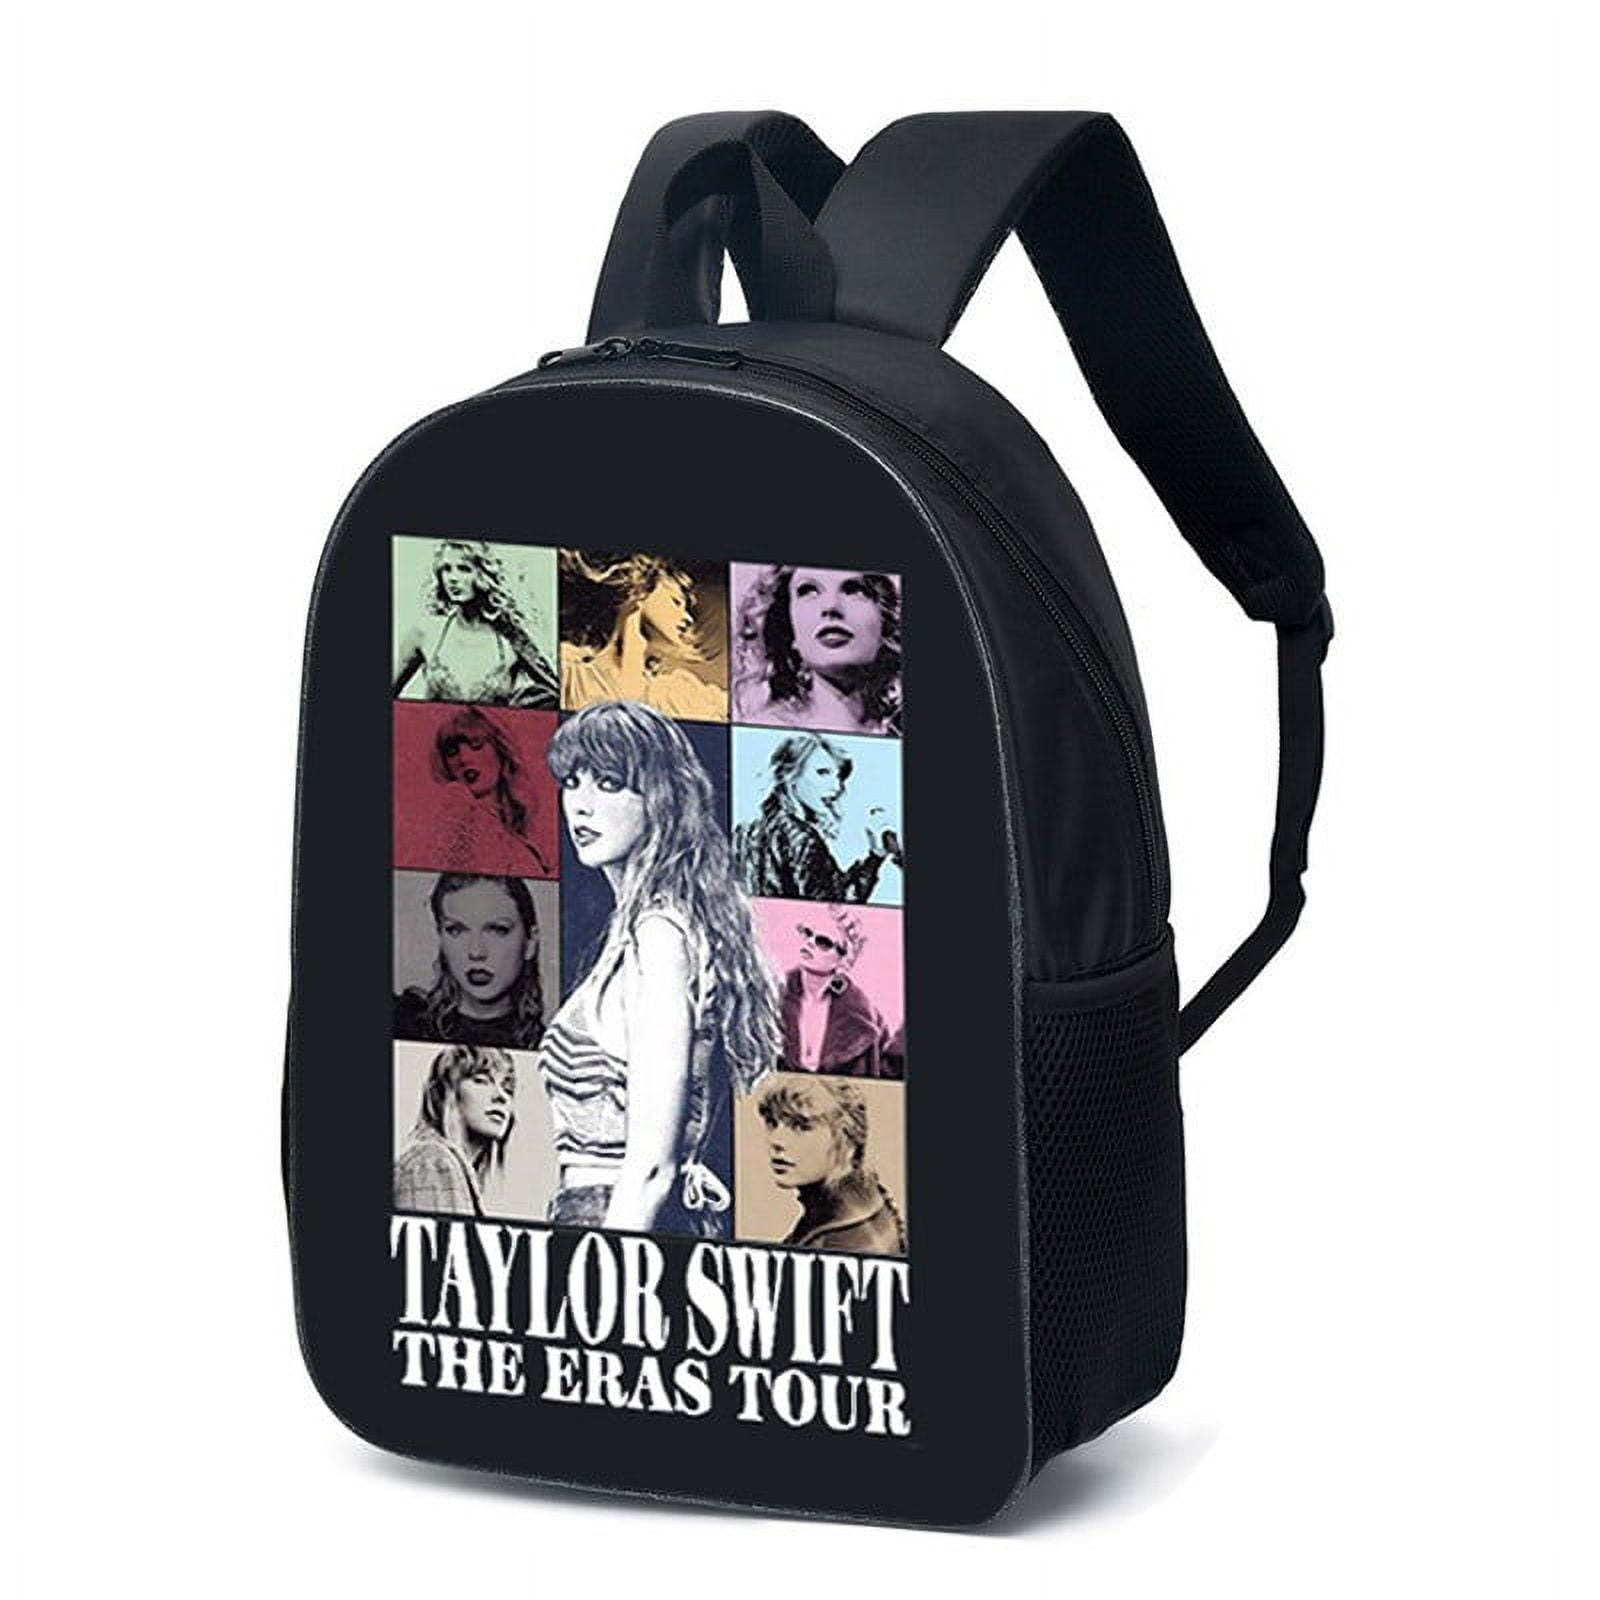 Guvpev TayIor Swift's Backpack,Travel Backpack,1989 Backpack Student Shoulder Bag Travel Laptop Backpack Gift, Women's, Size: 11.8Lx5.9Wx15.5H